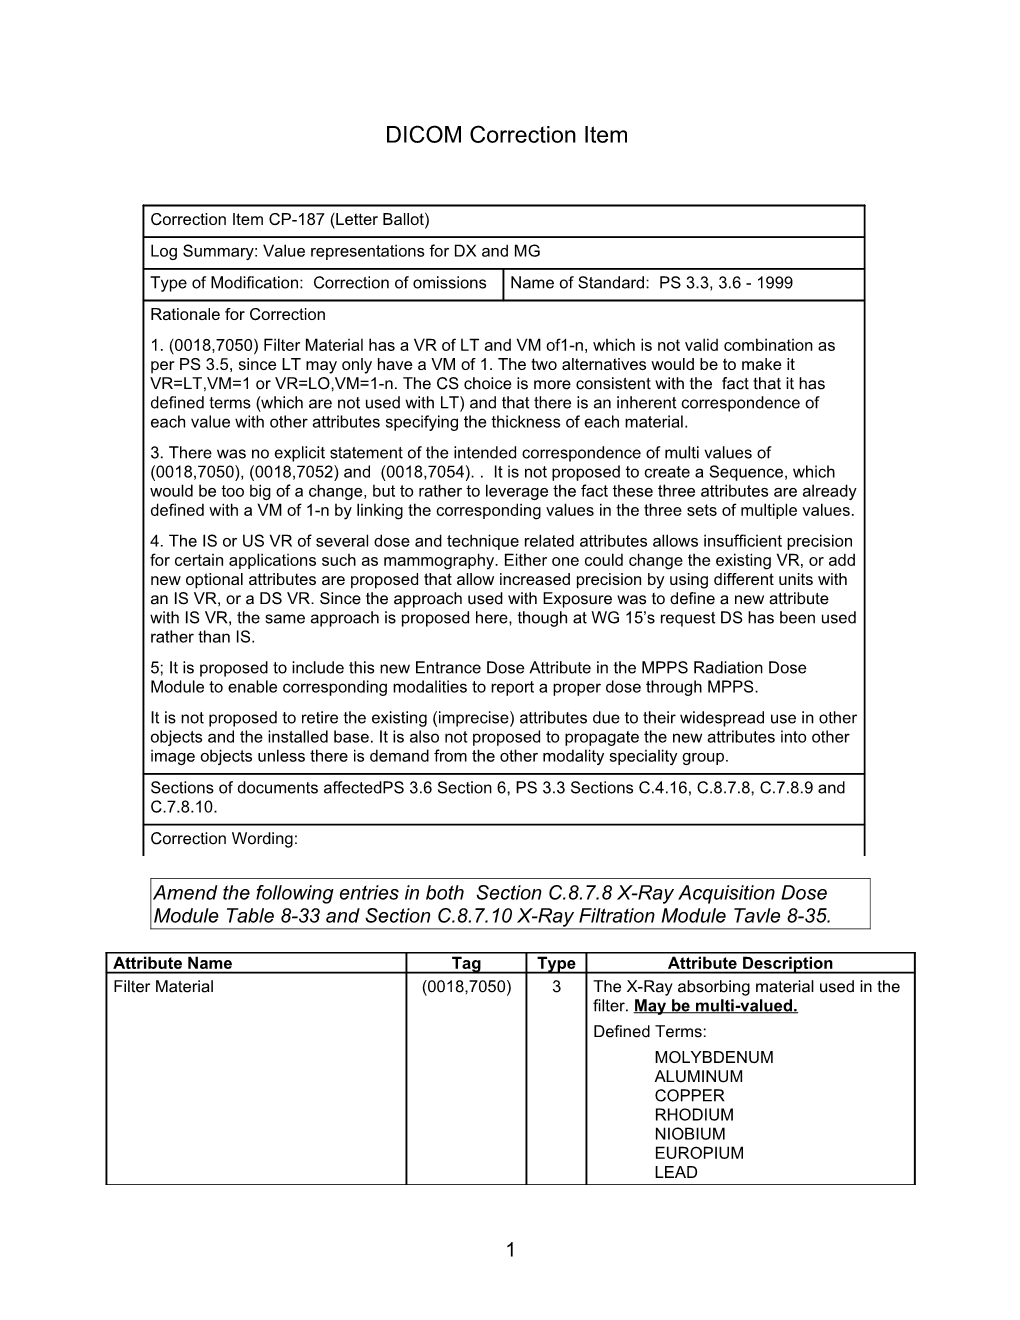 DICOM Correction Proposal Form s4